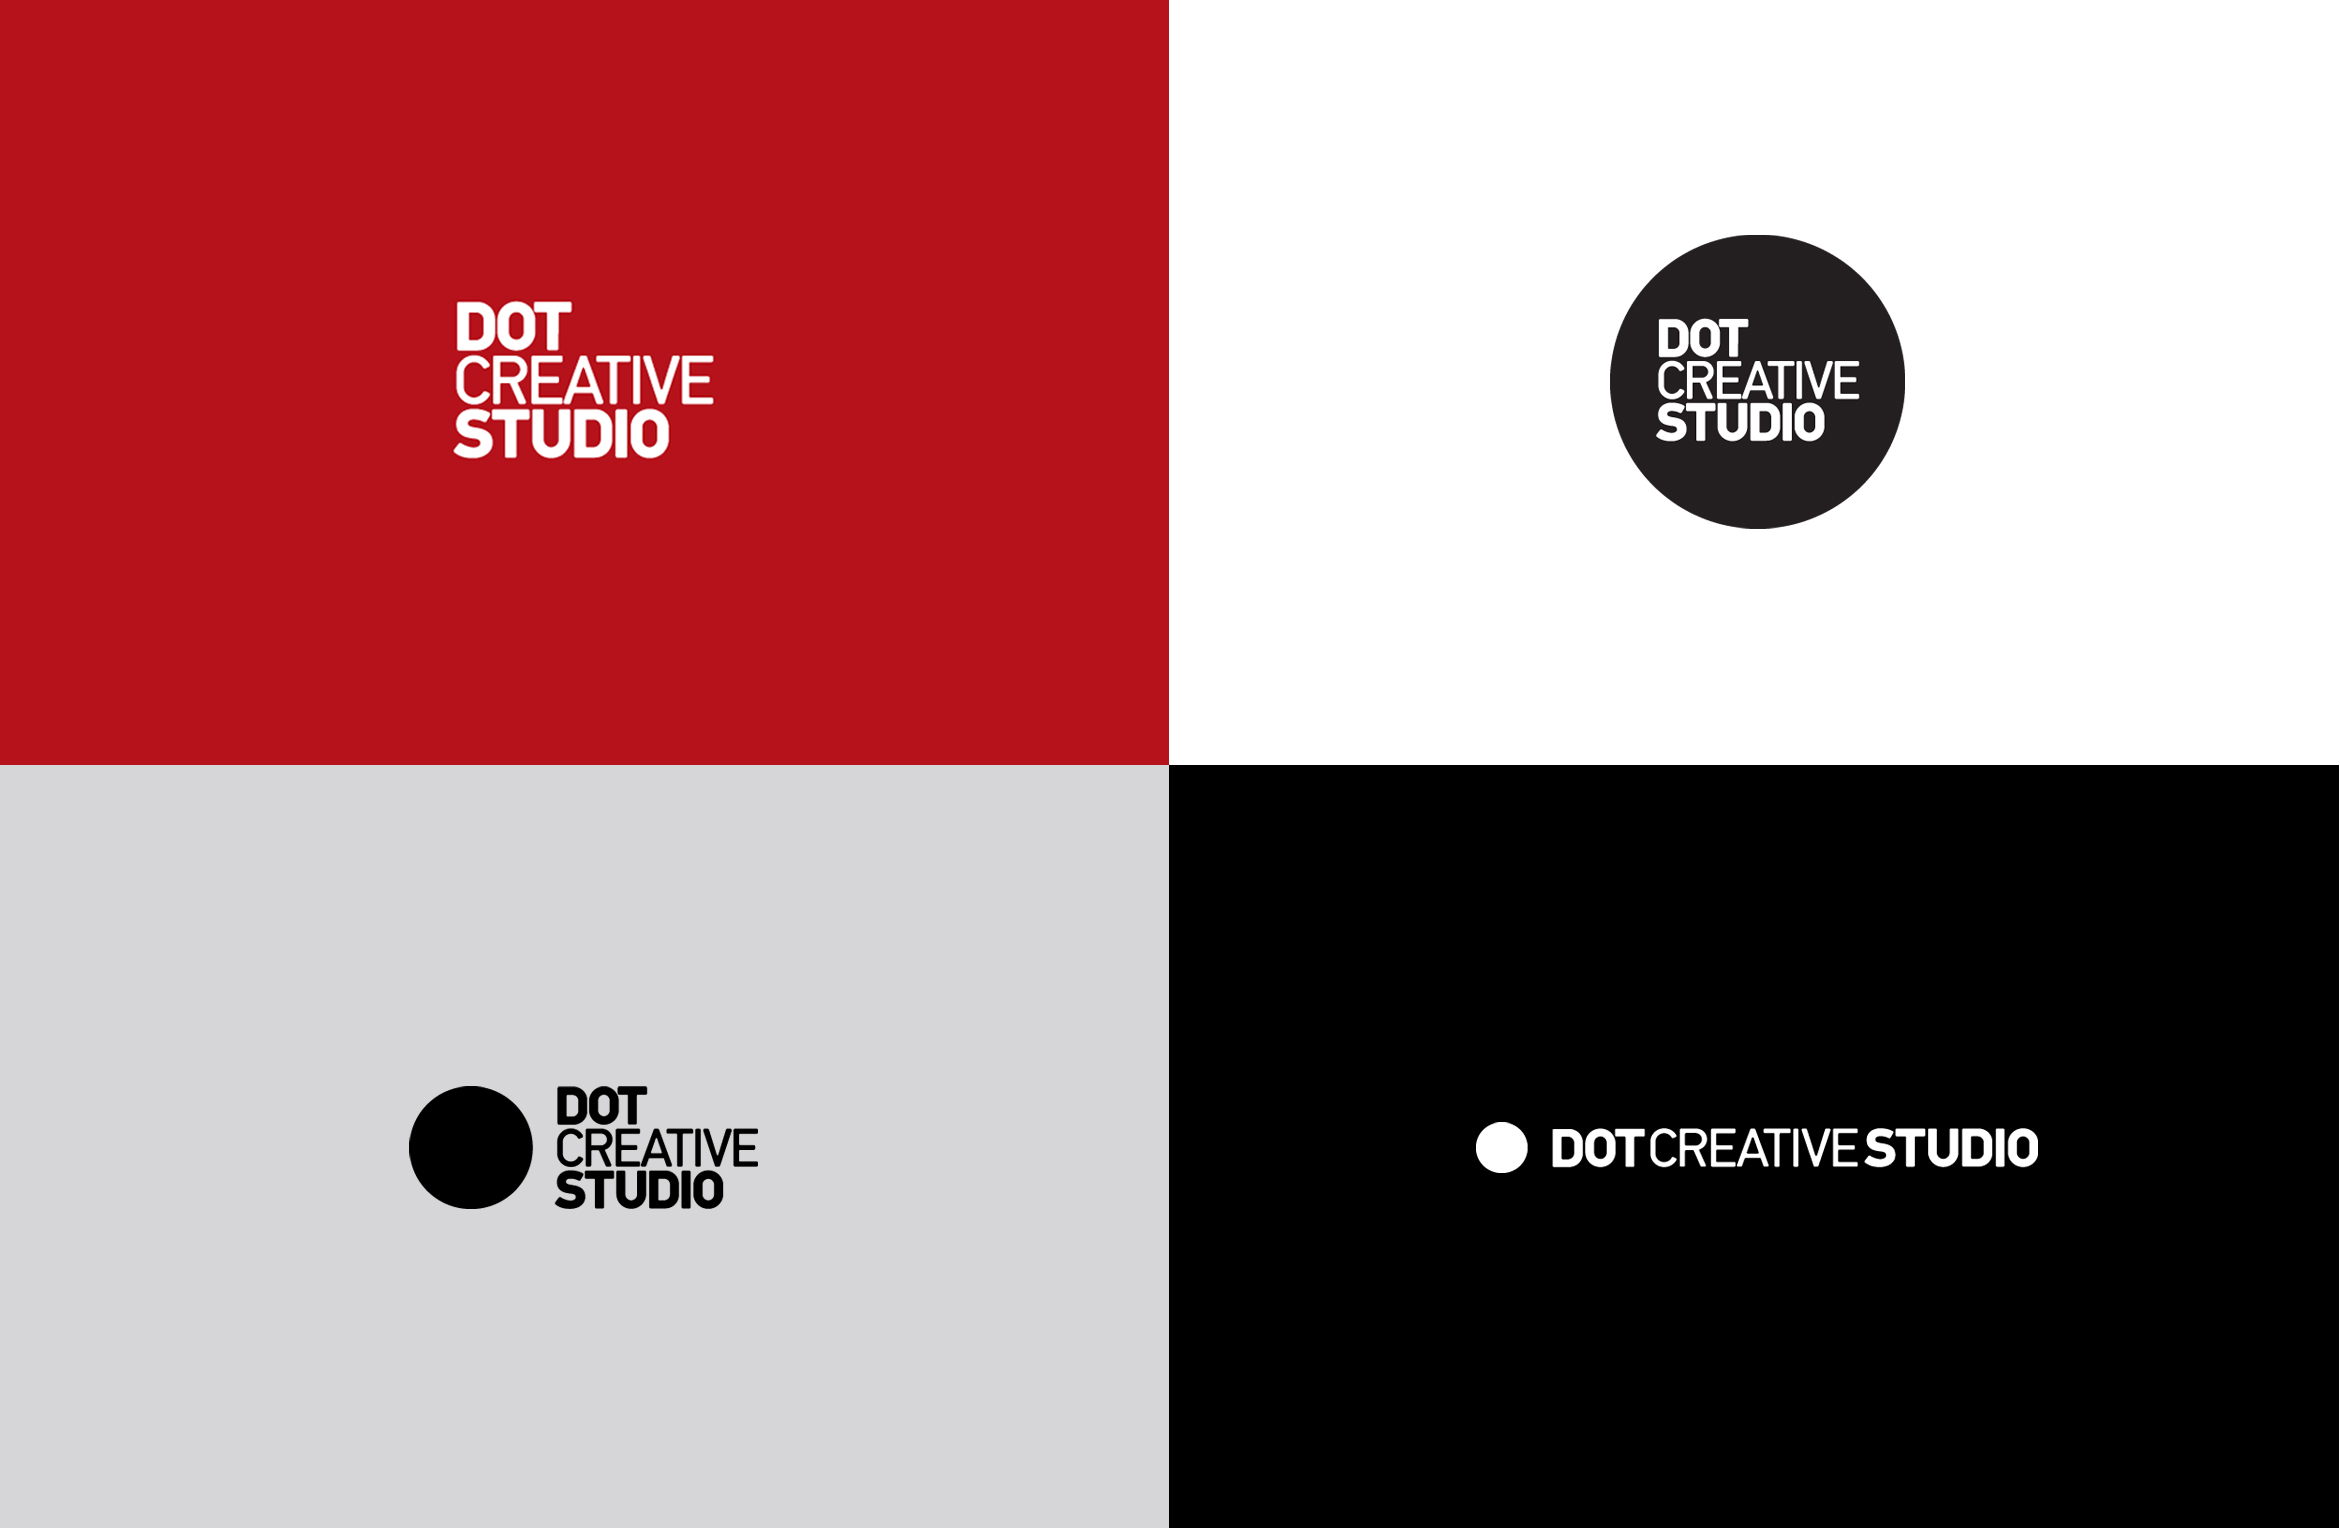 Dot Creative Studio colors